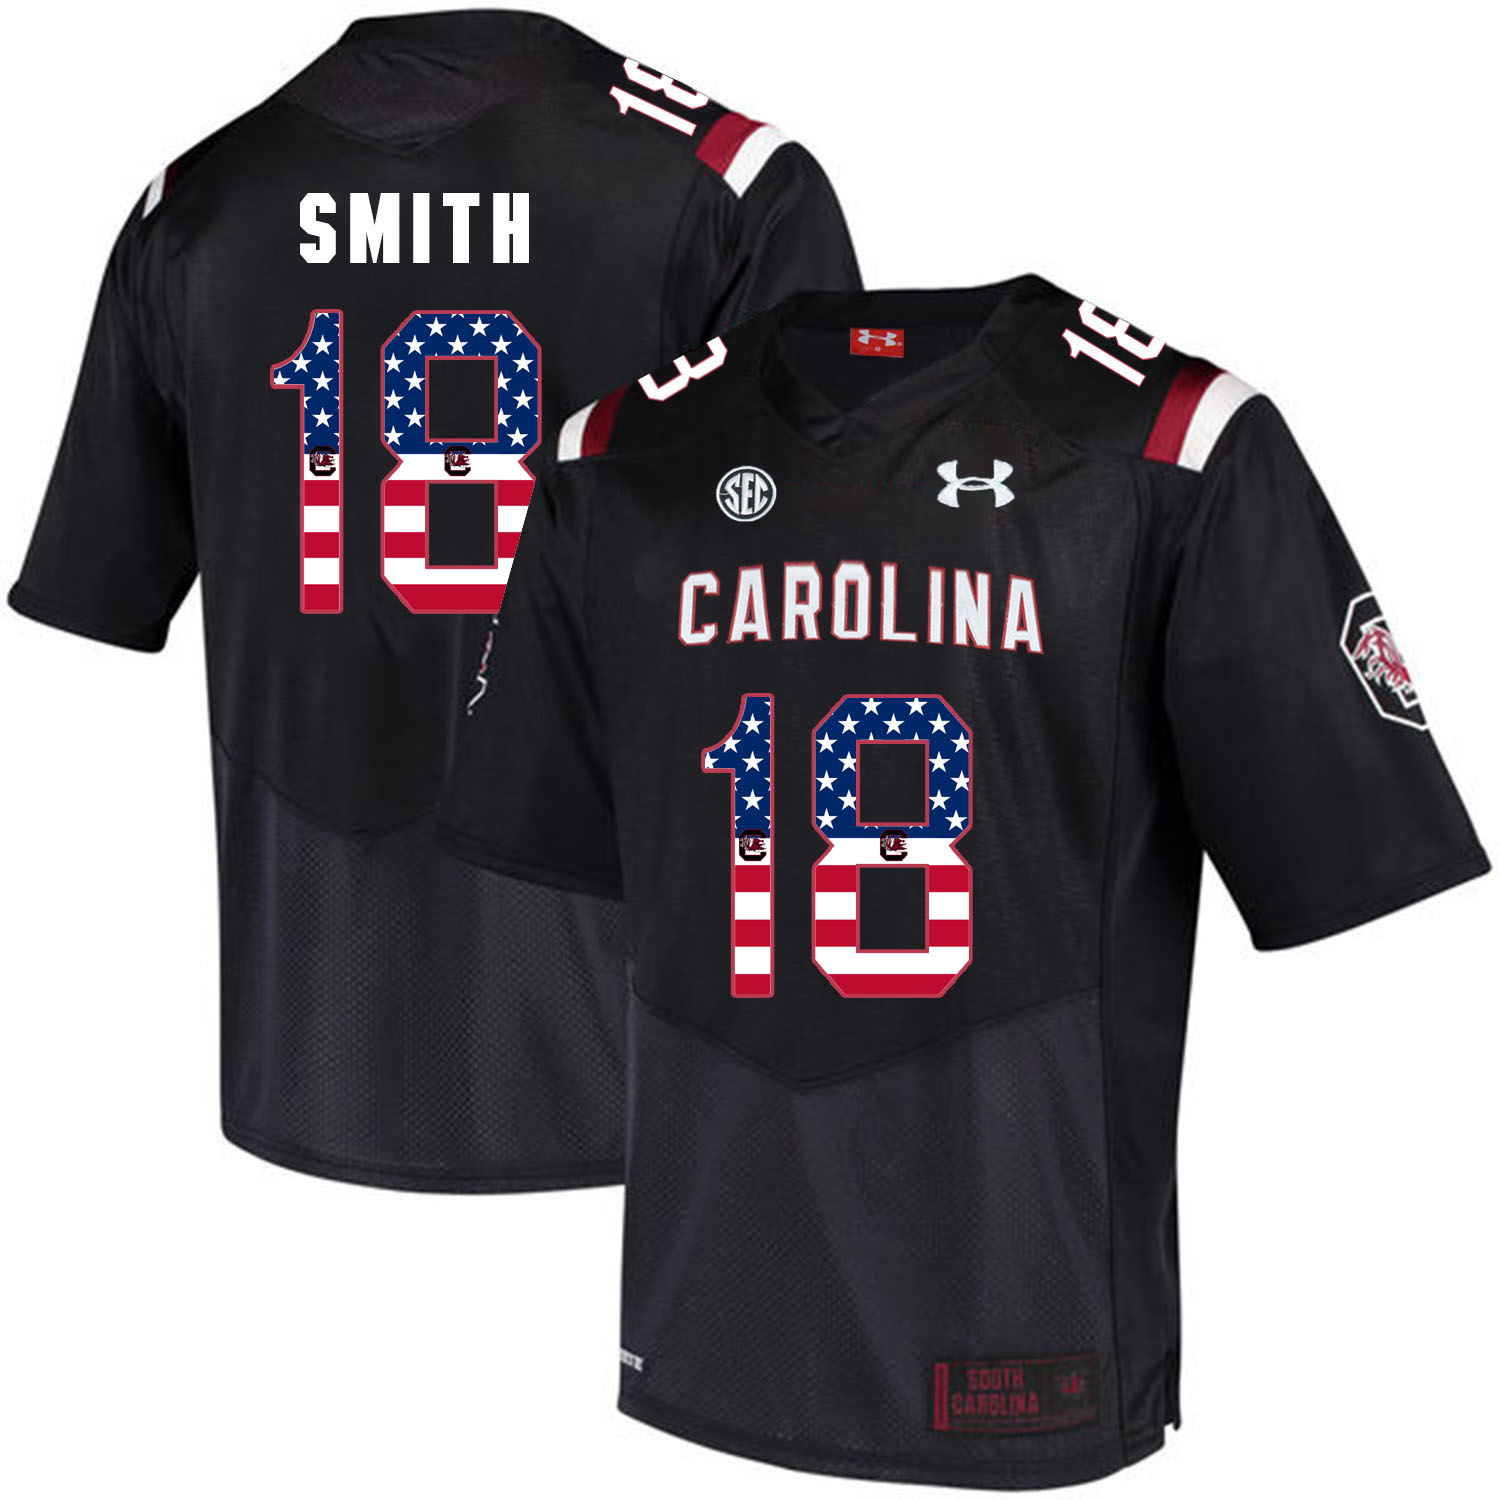 South Carolina Gamecocks 18 OrTre Smith Black USA Flag College Football Jersey